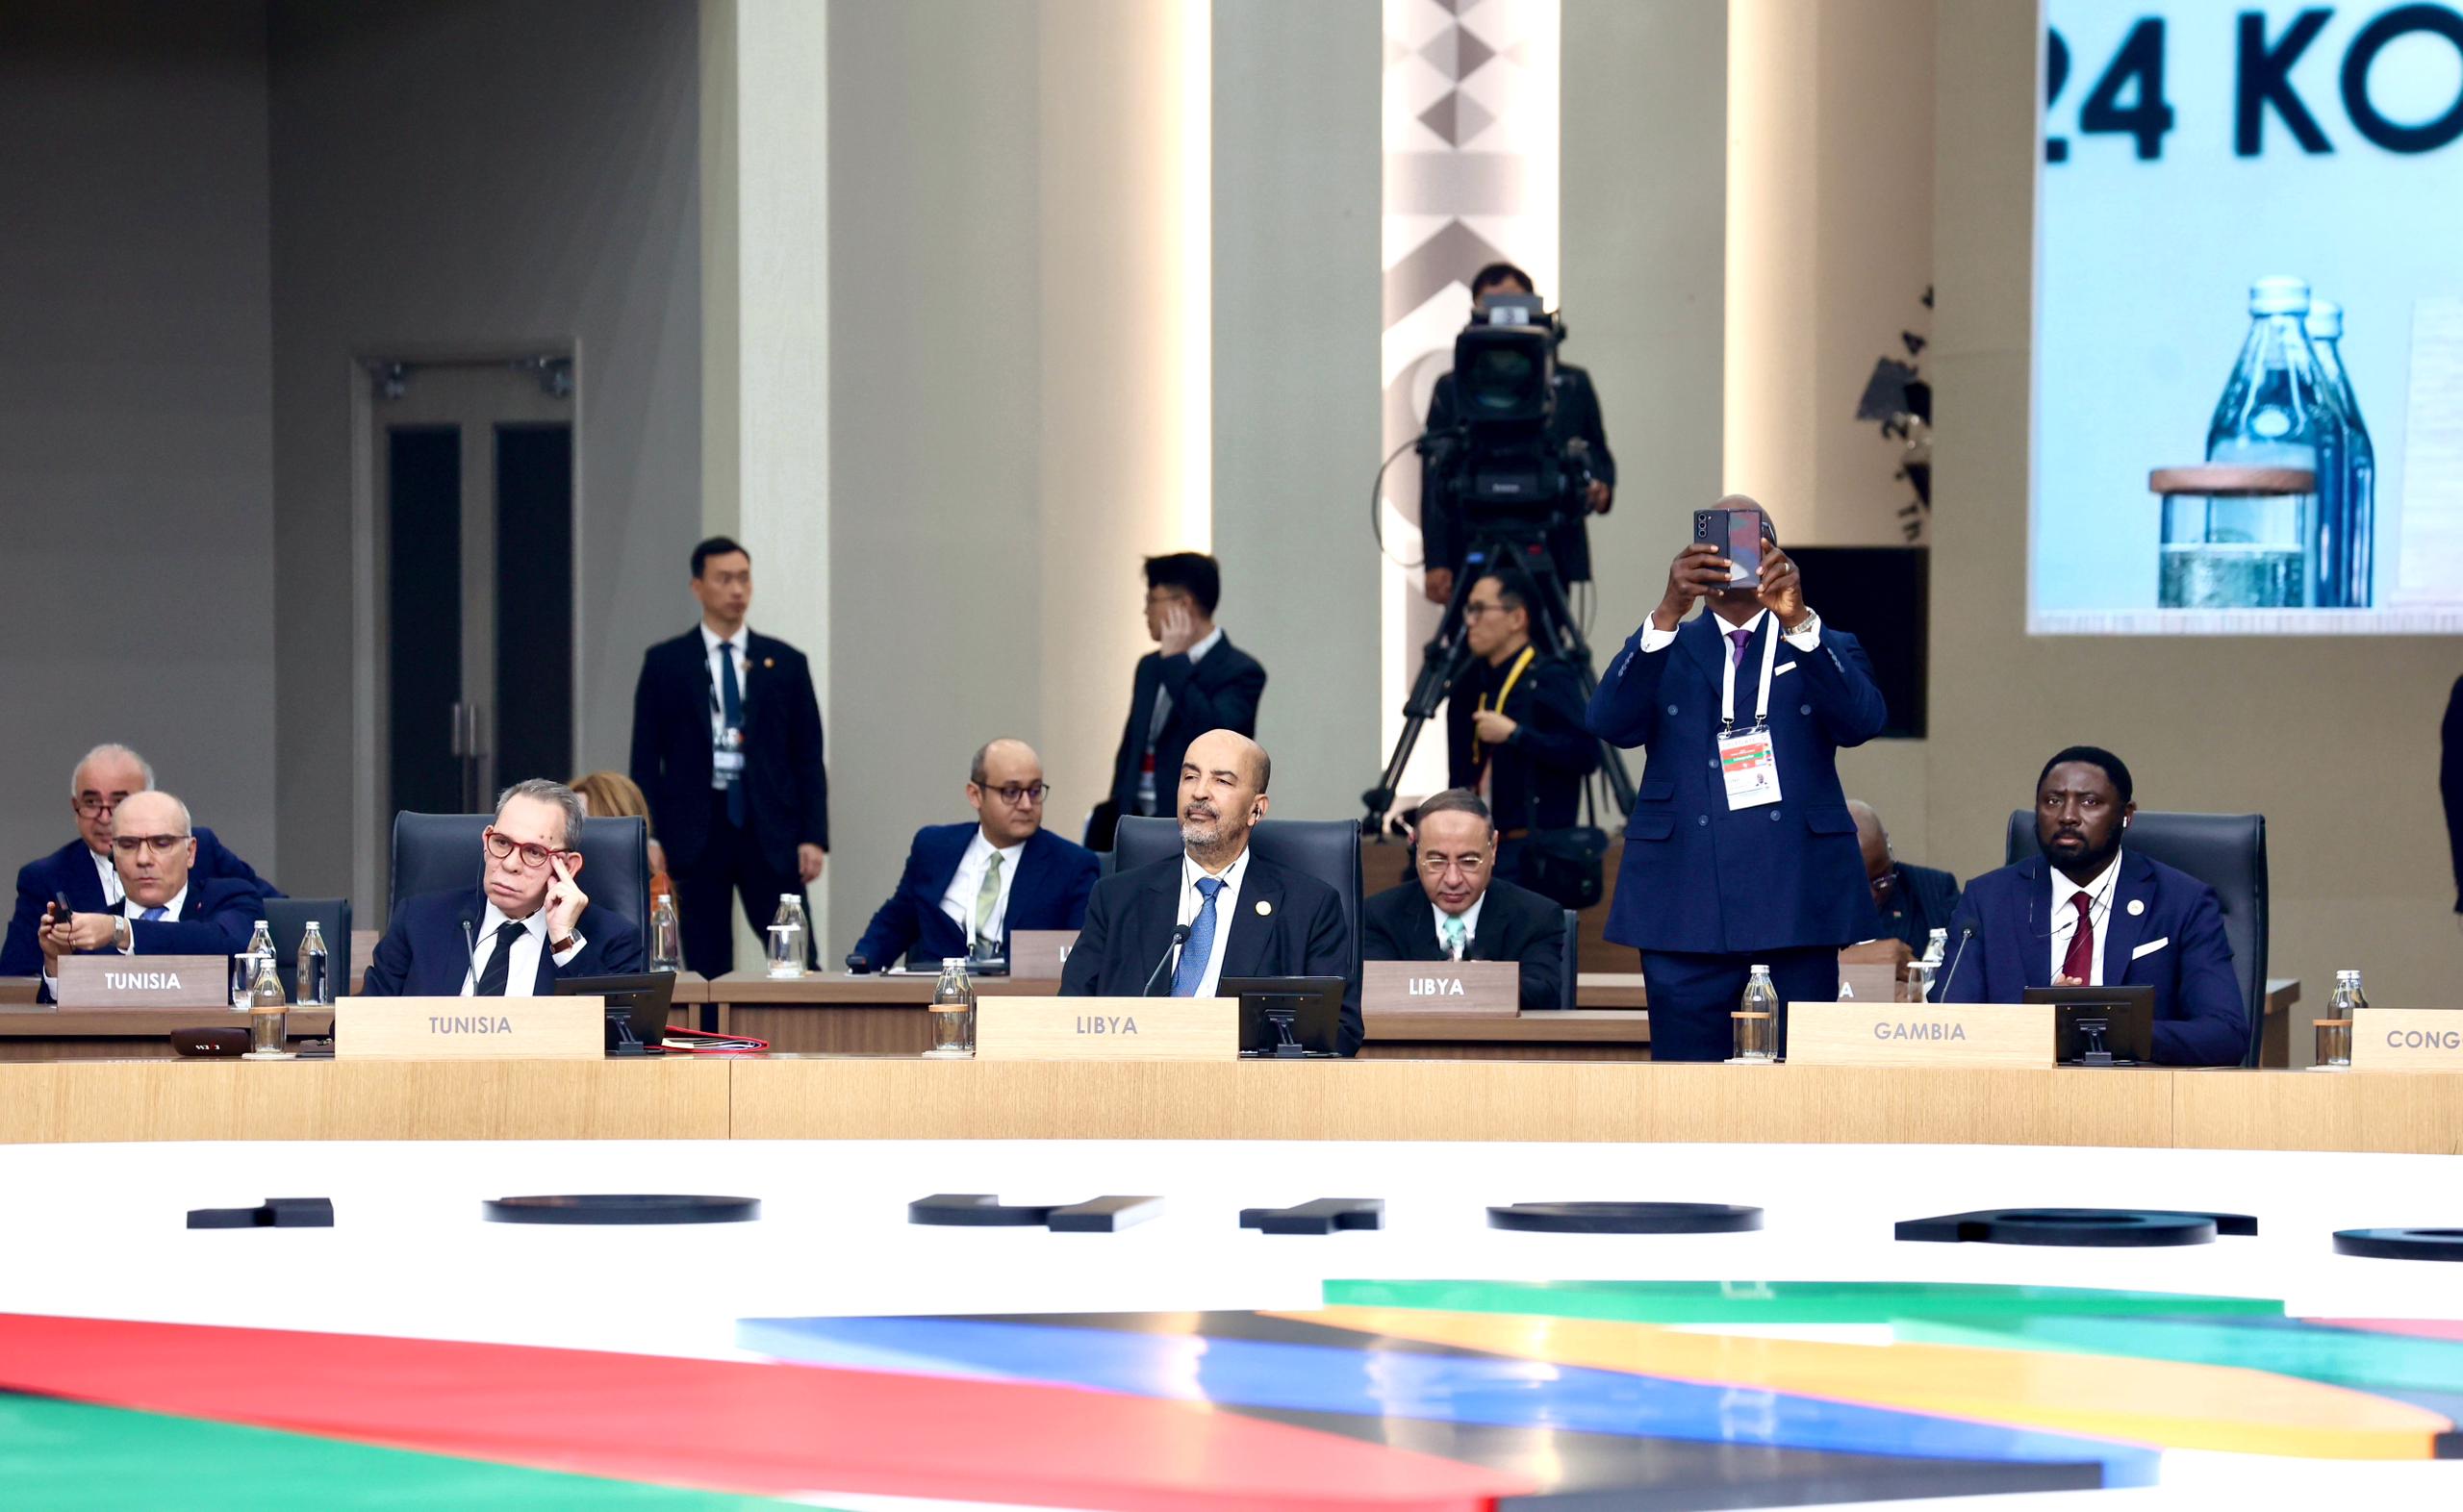 Representative in the Presidential Council, Musa Al-Koni, participates in the African-Korean summit held in Seoul, Korea.